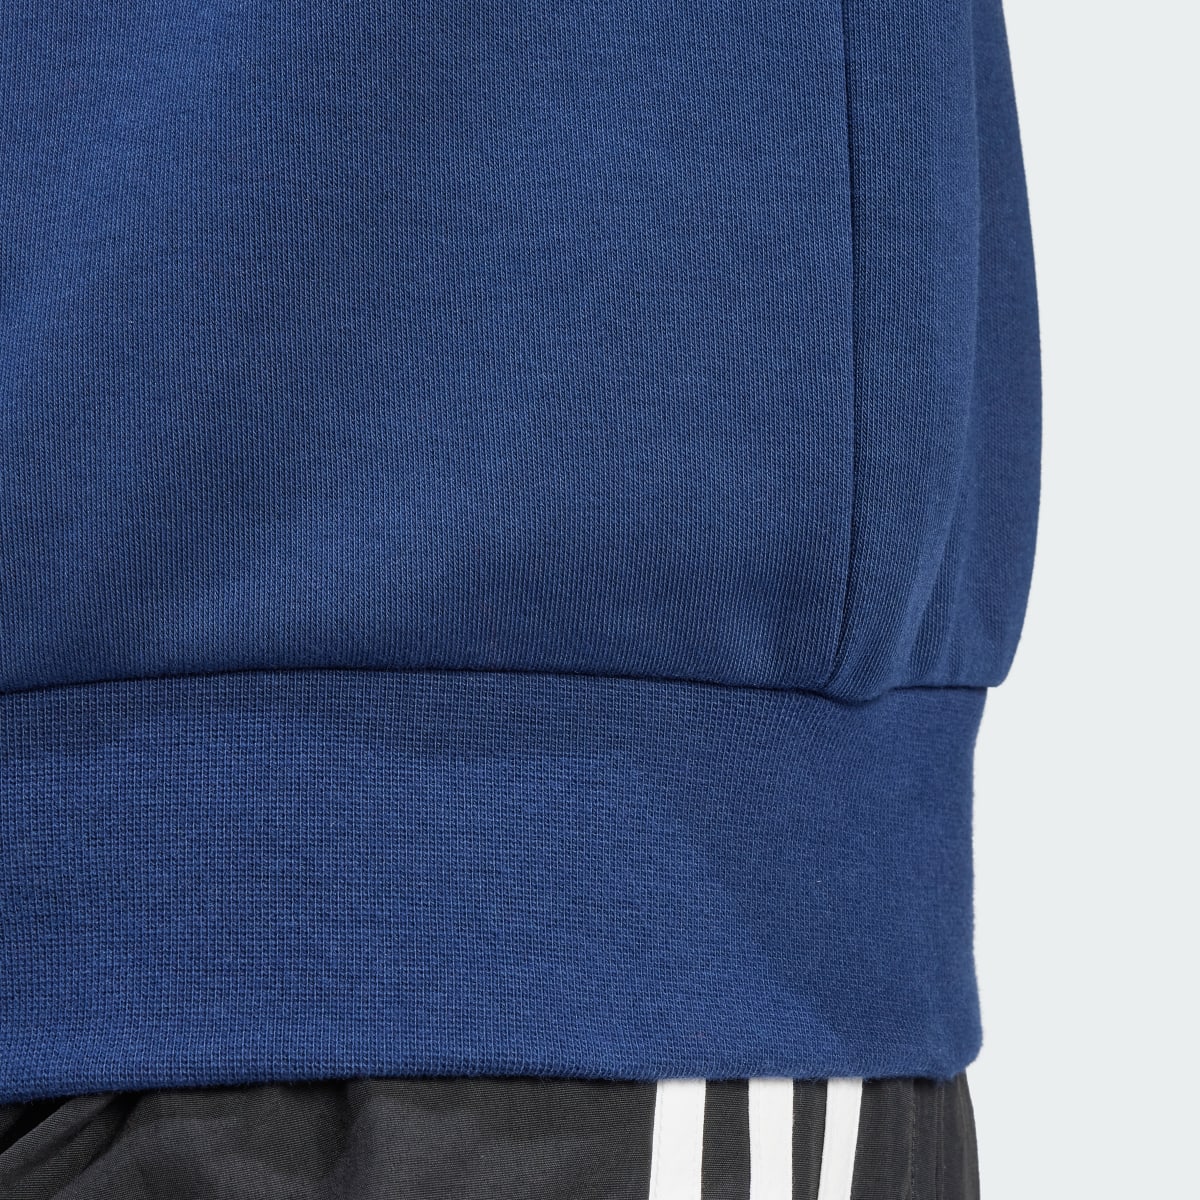 Adidas Sweatshirt Cultural Story da Juventus. 7